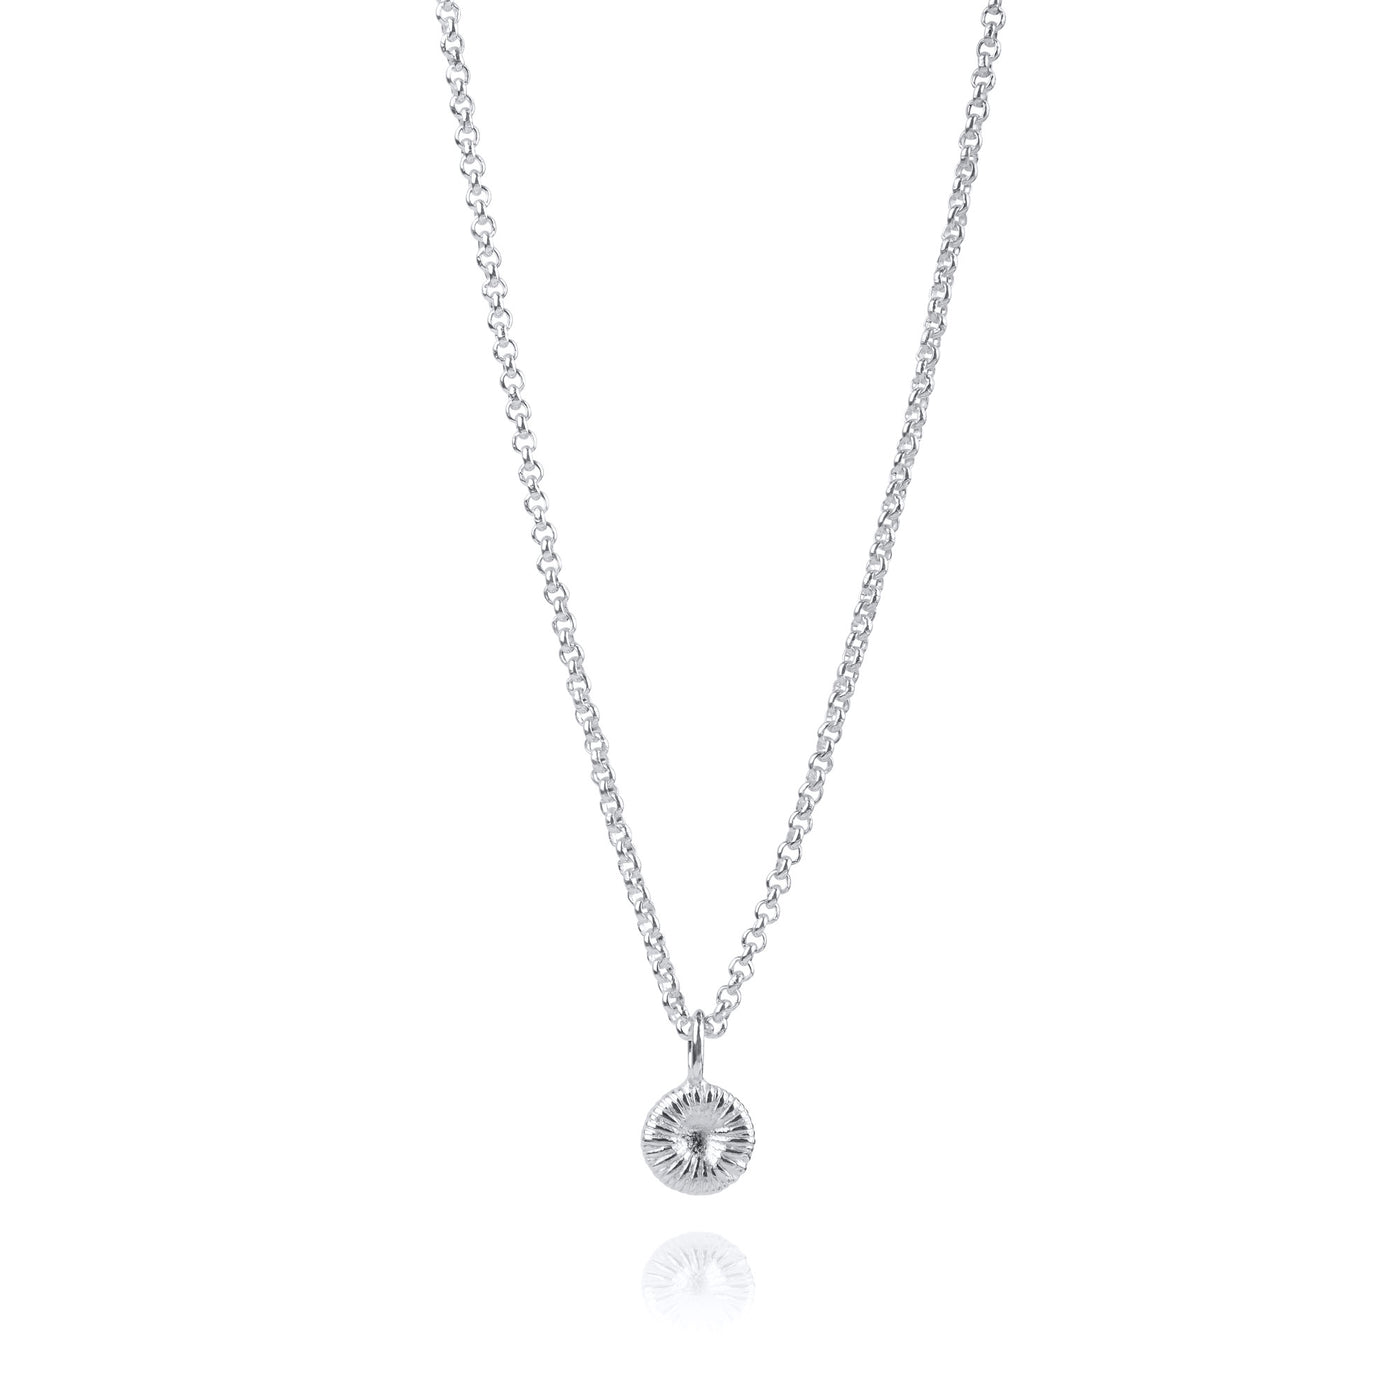 Button coral - Charm necklace medium